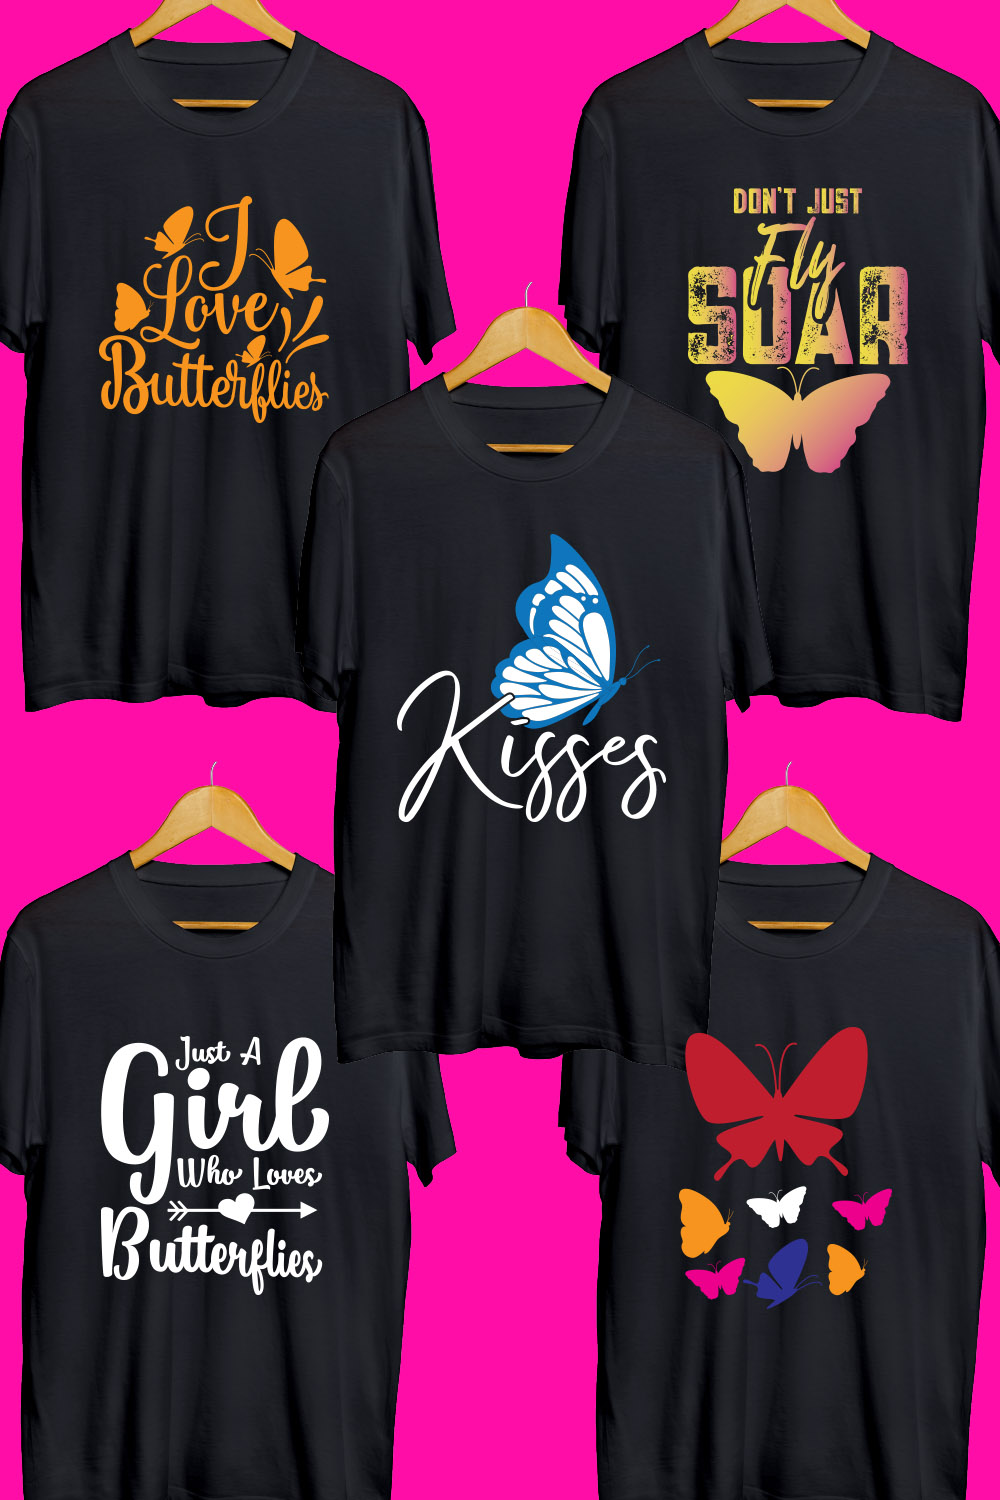 Butterfly SVG T Shirt Designs Bundle pinterest preview image.